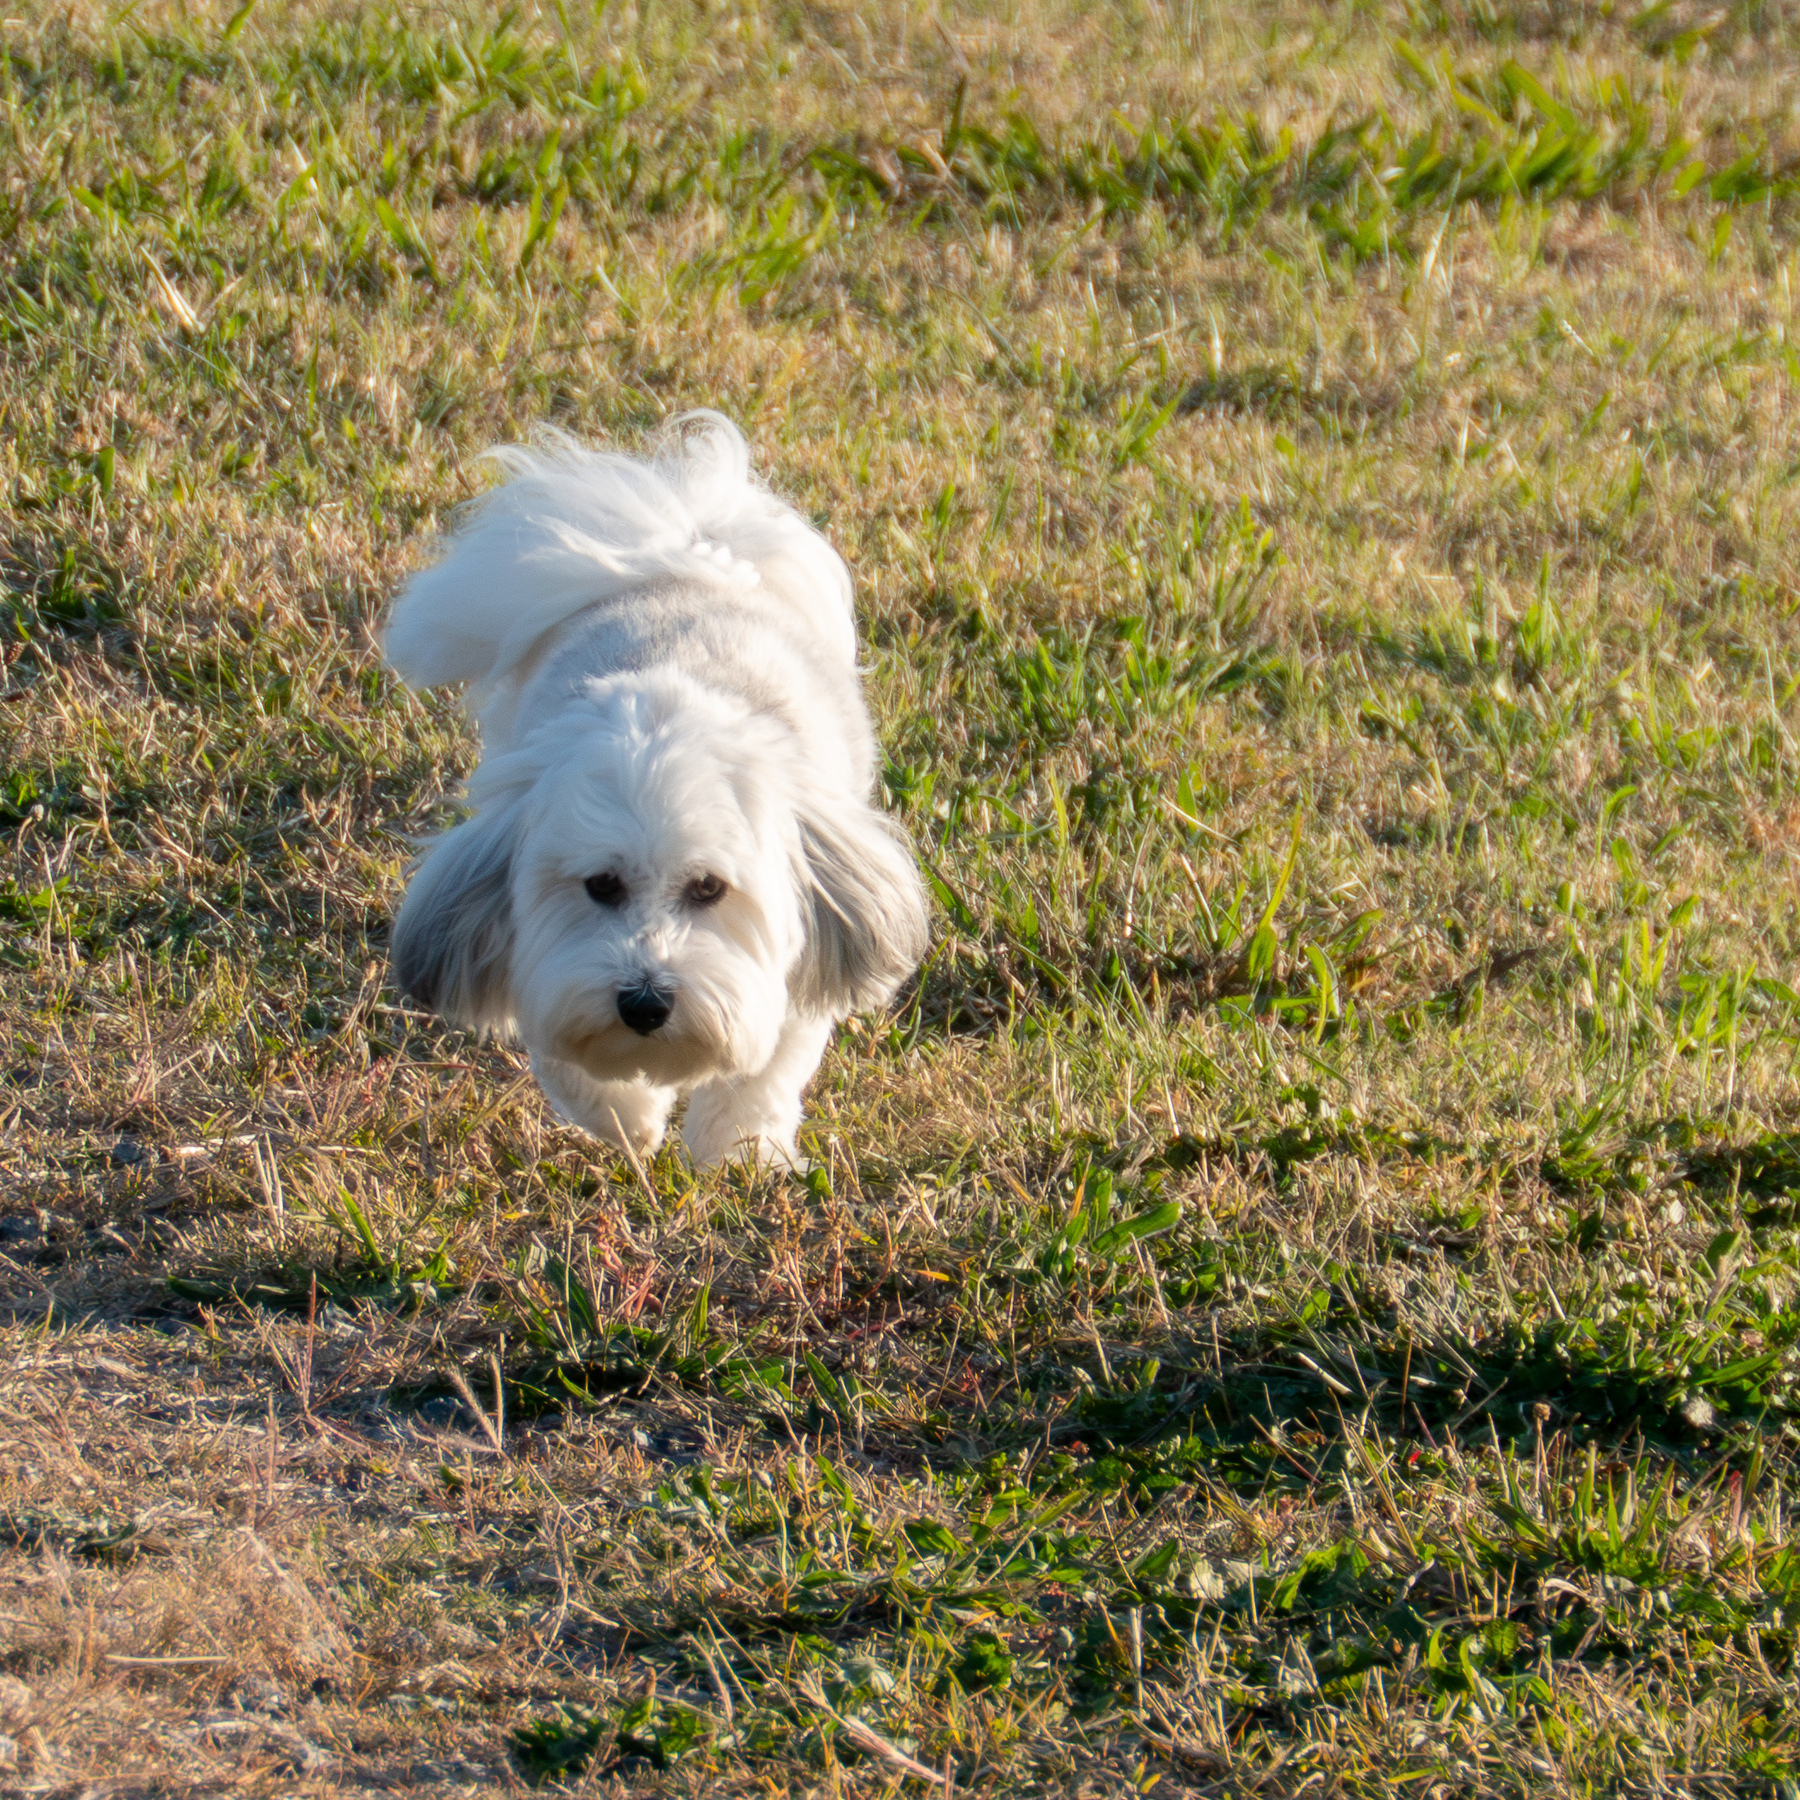 Trinket the white fluffy dog running along the grass.